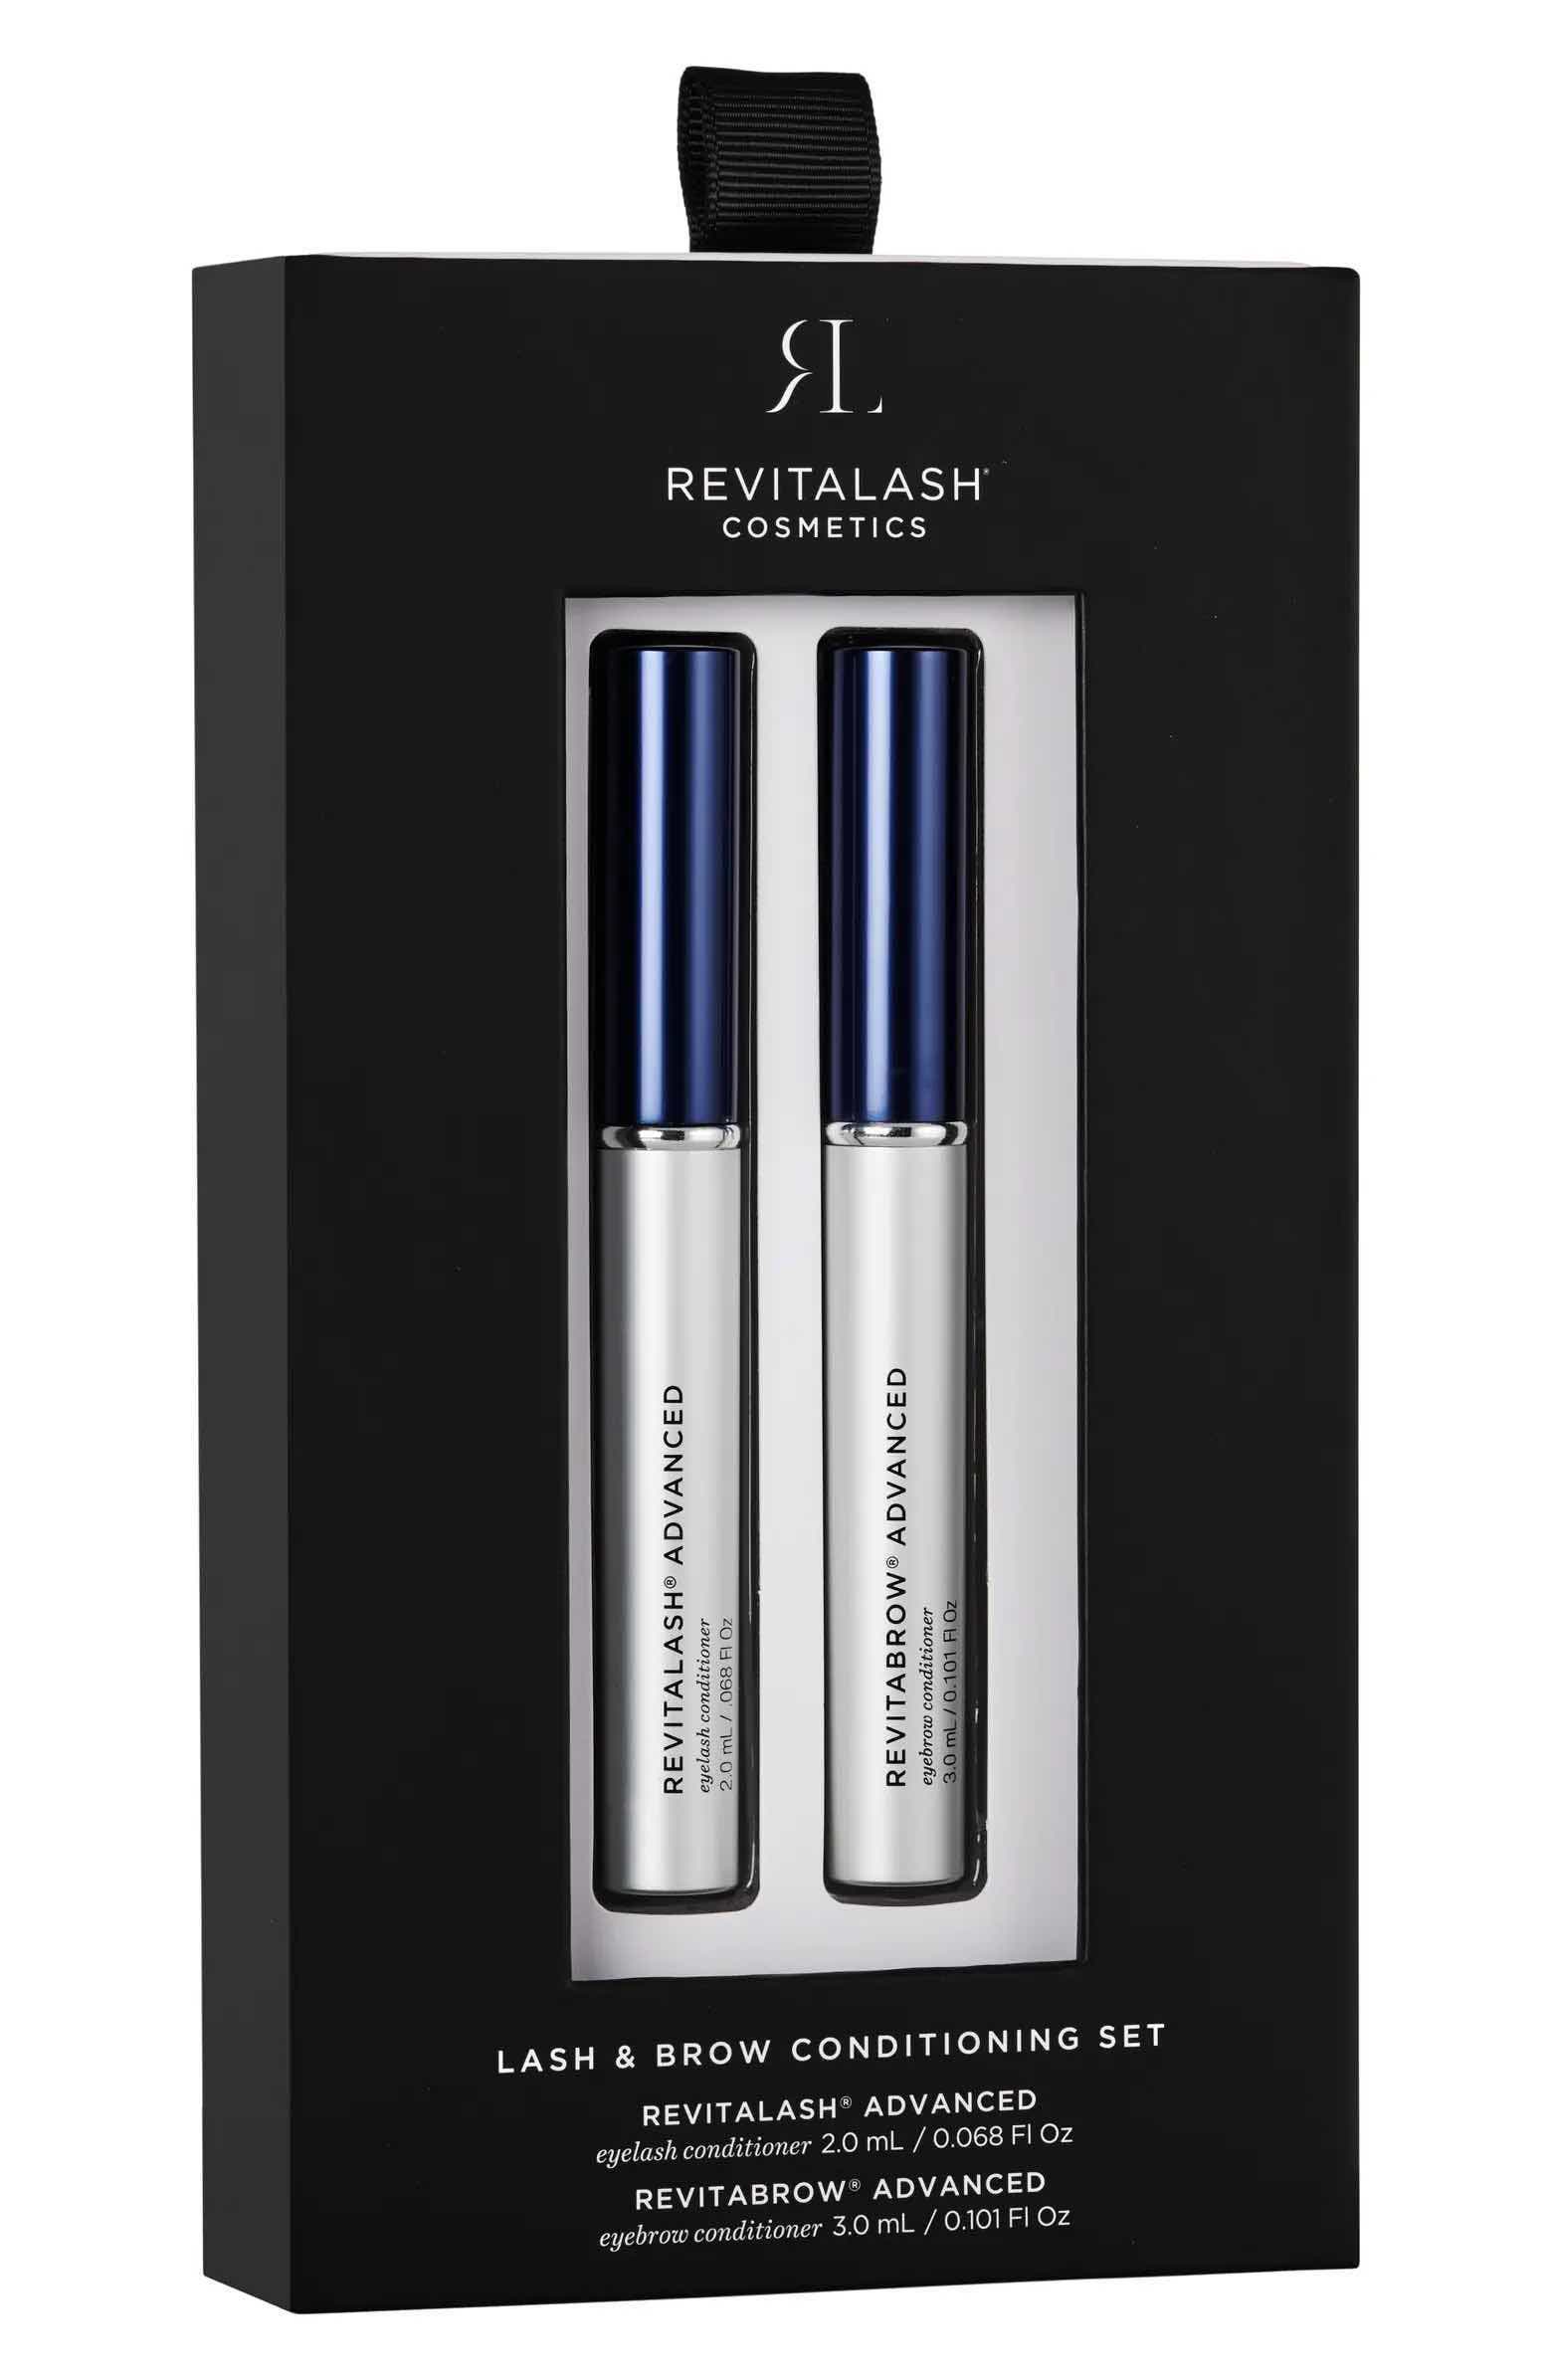 Revitalash Cosmetics Lash & Brow Conditioning Set